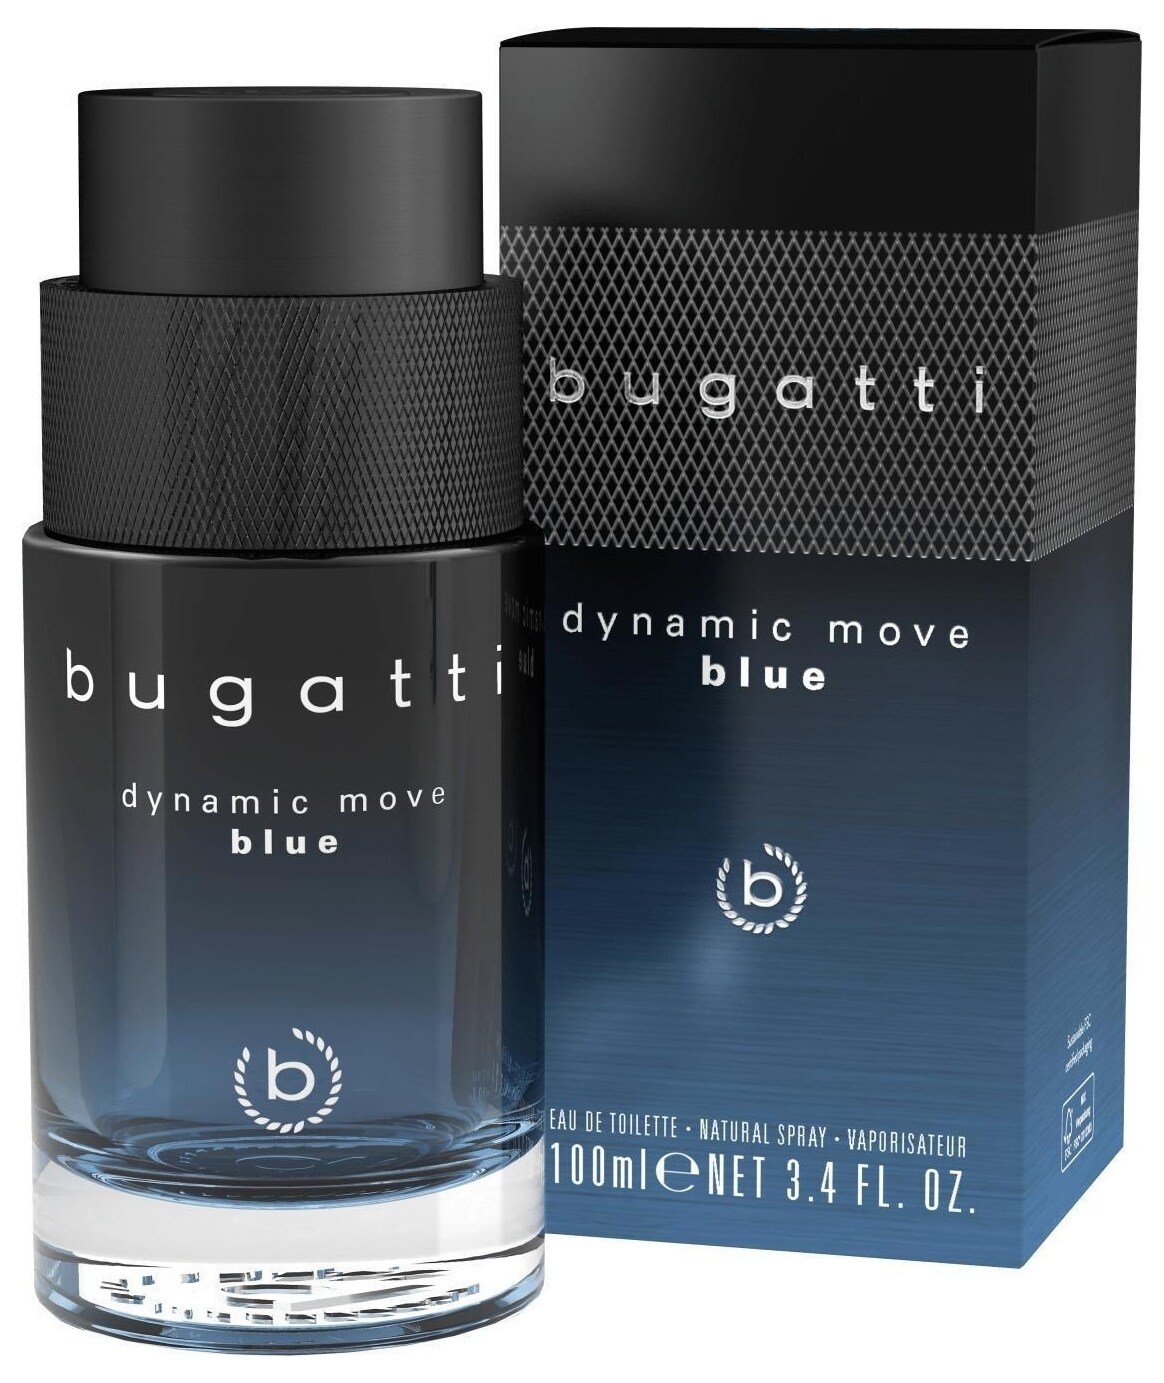 Blue Dynamic by Perfume » Reviews bugatti Move Facts & Fashion